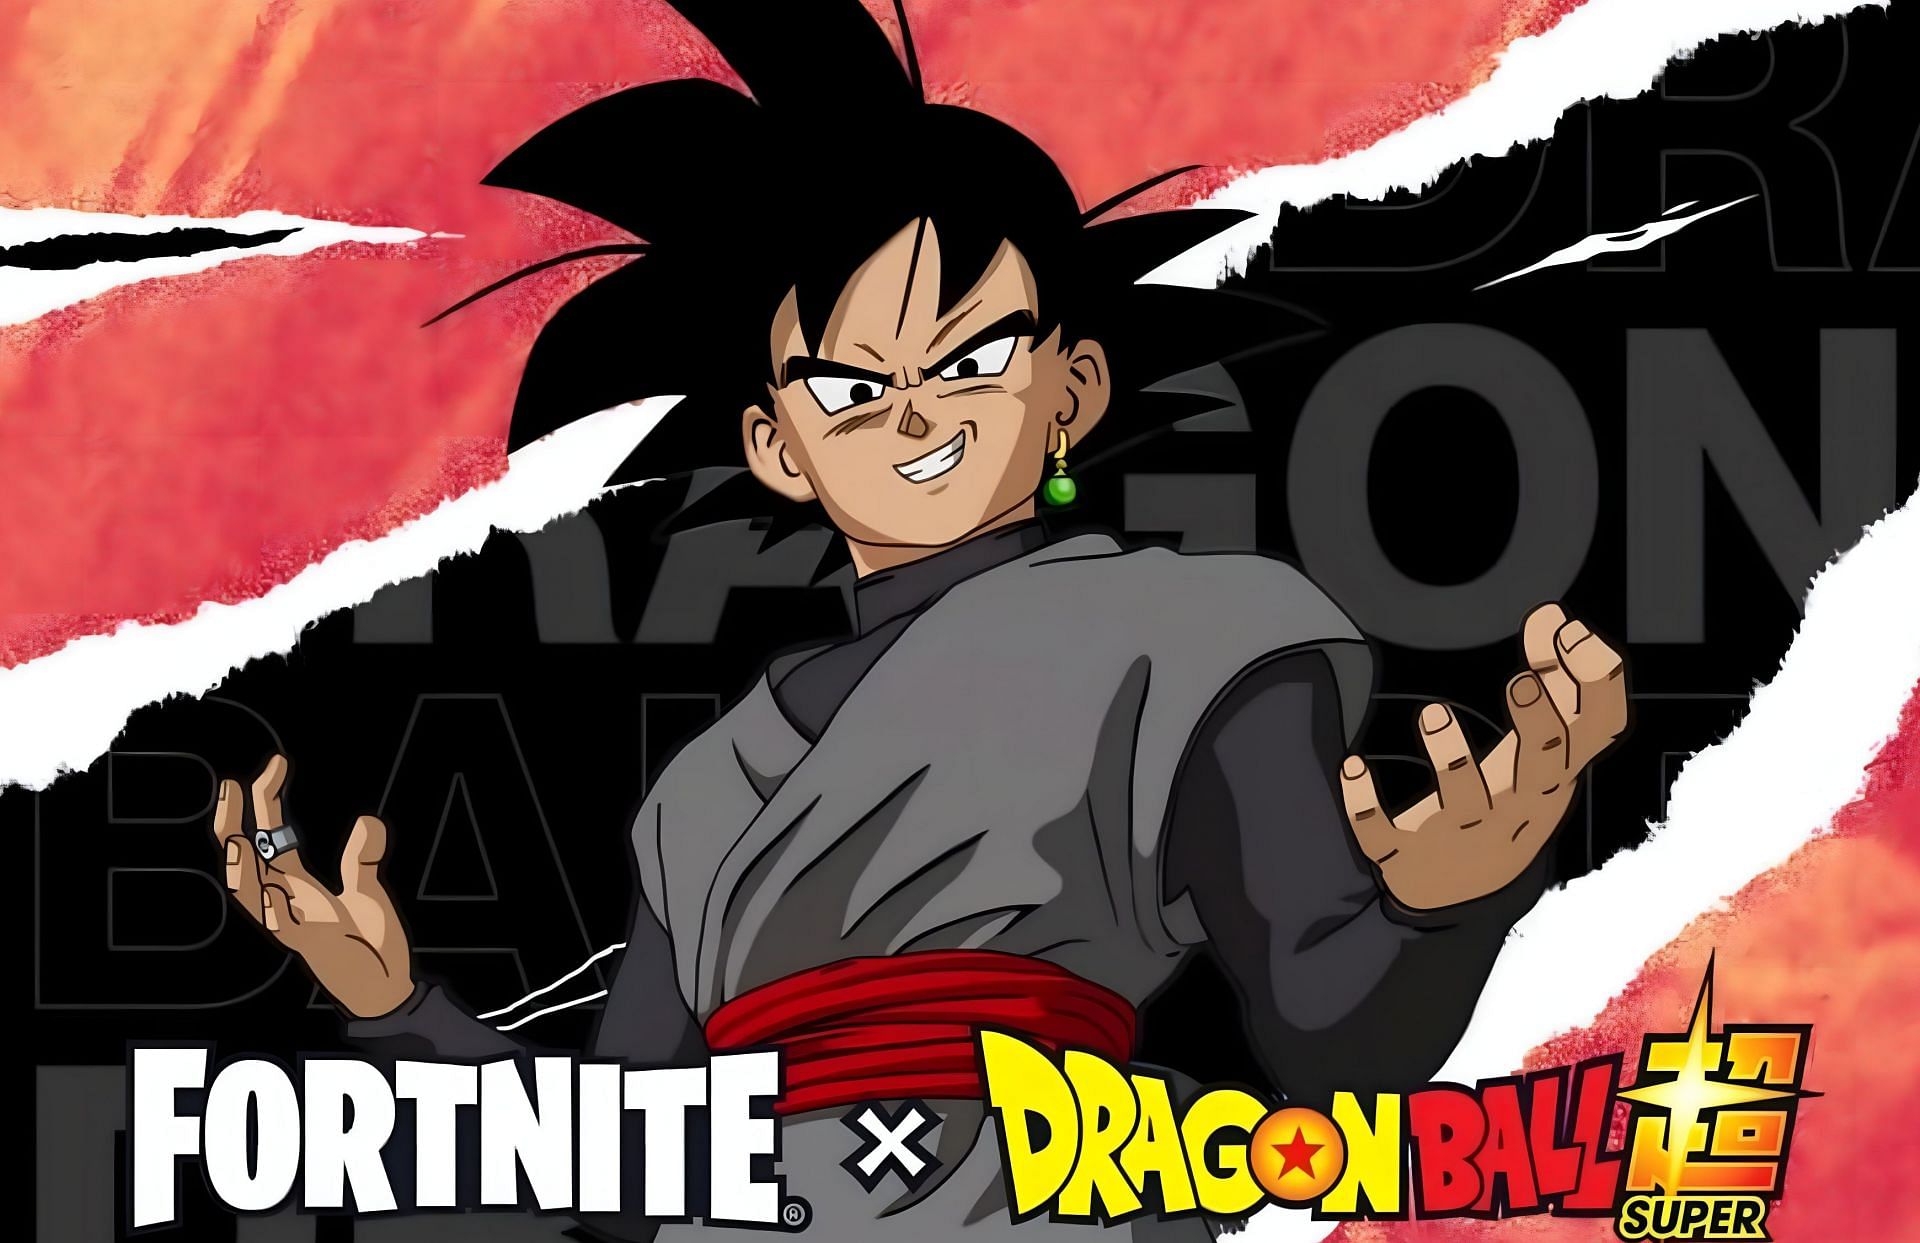 Goku Black - Fortnite Skin 